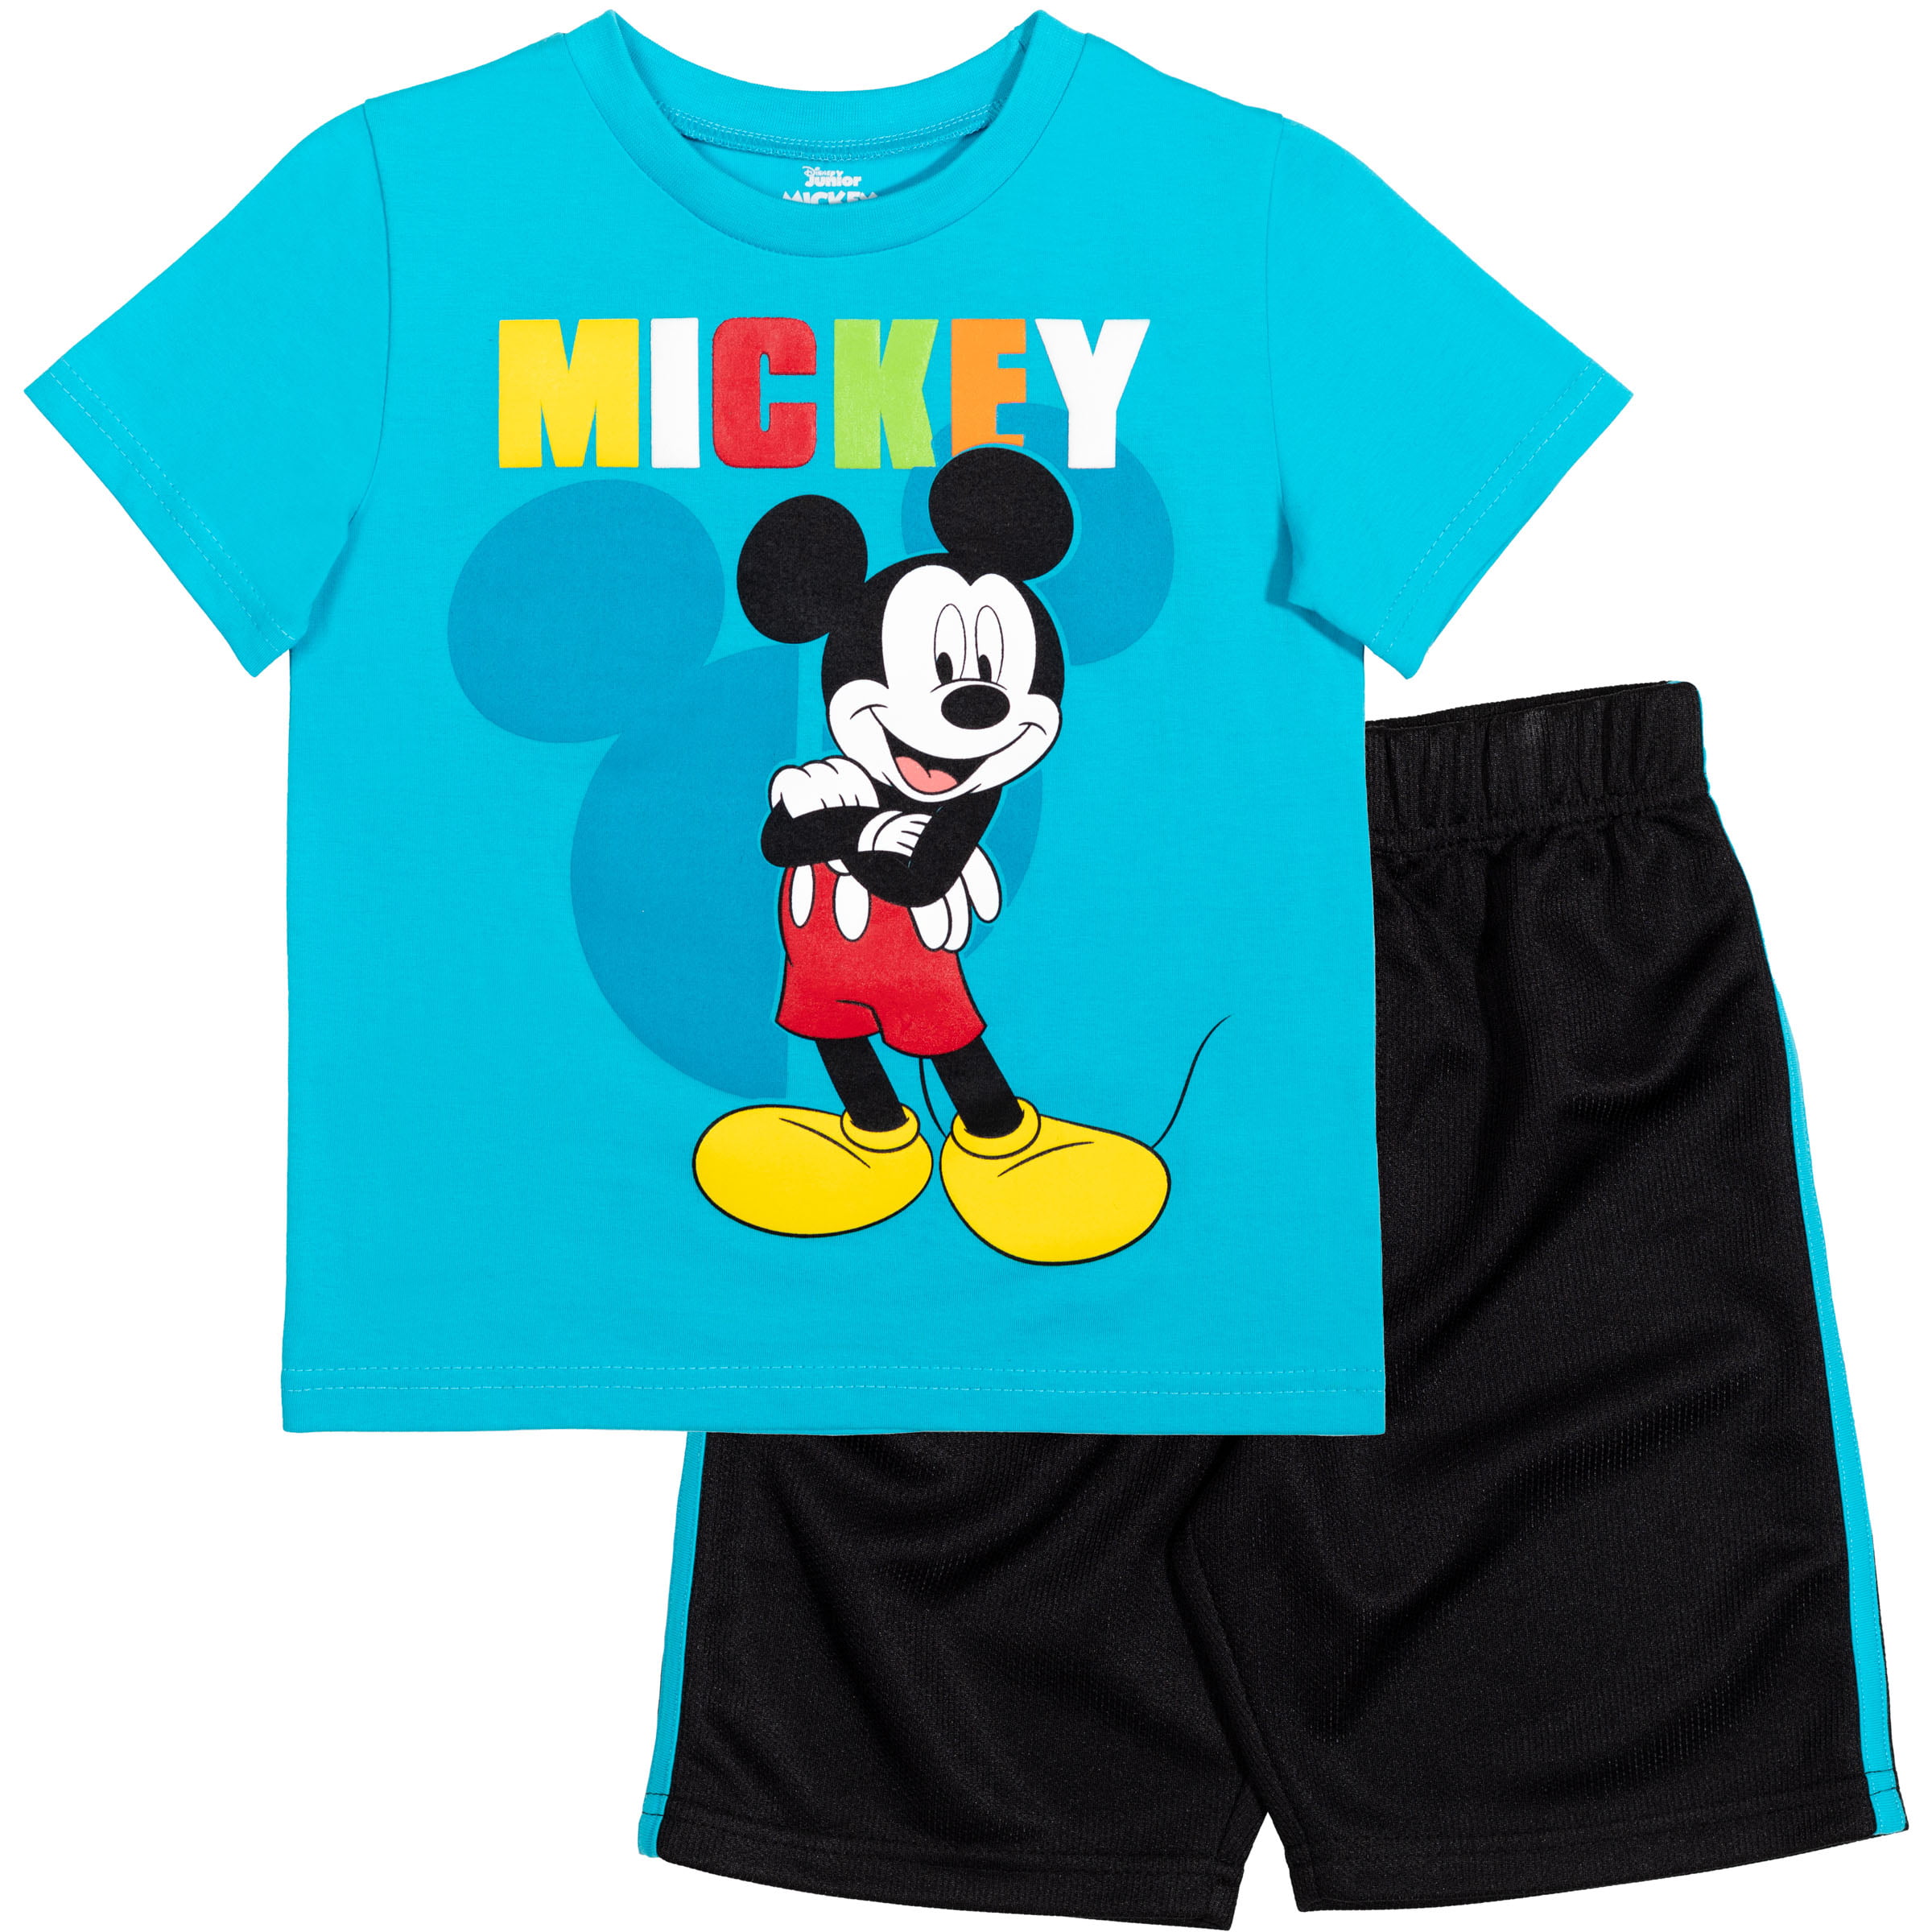 Disney Infant Toddler Boys Mickey Mouse 3pc Set Size 12M 18M 24M 2T 3T 4T 5T 